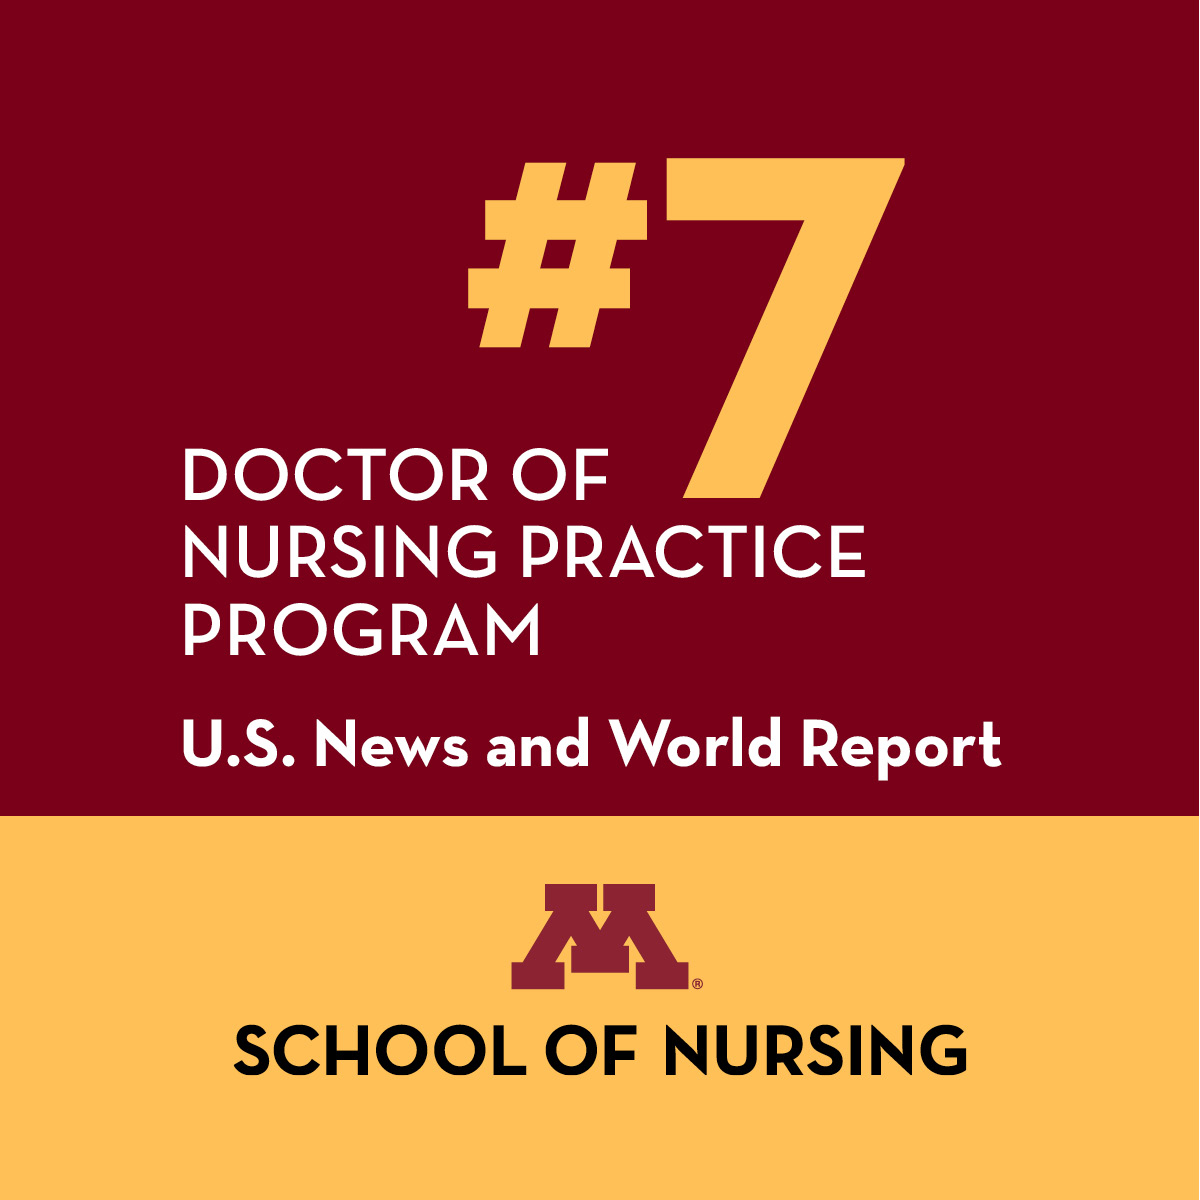 7th Doctor of Nursing Practice Program per U.S. News and World report